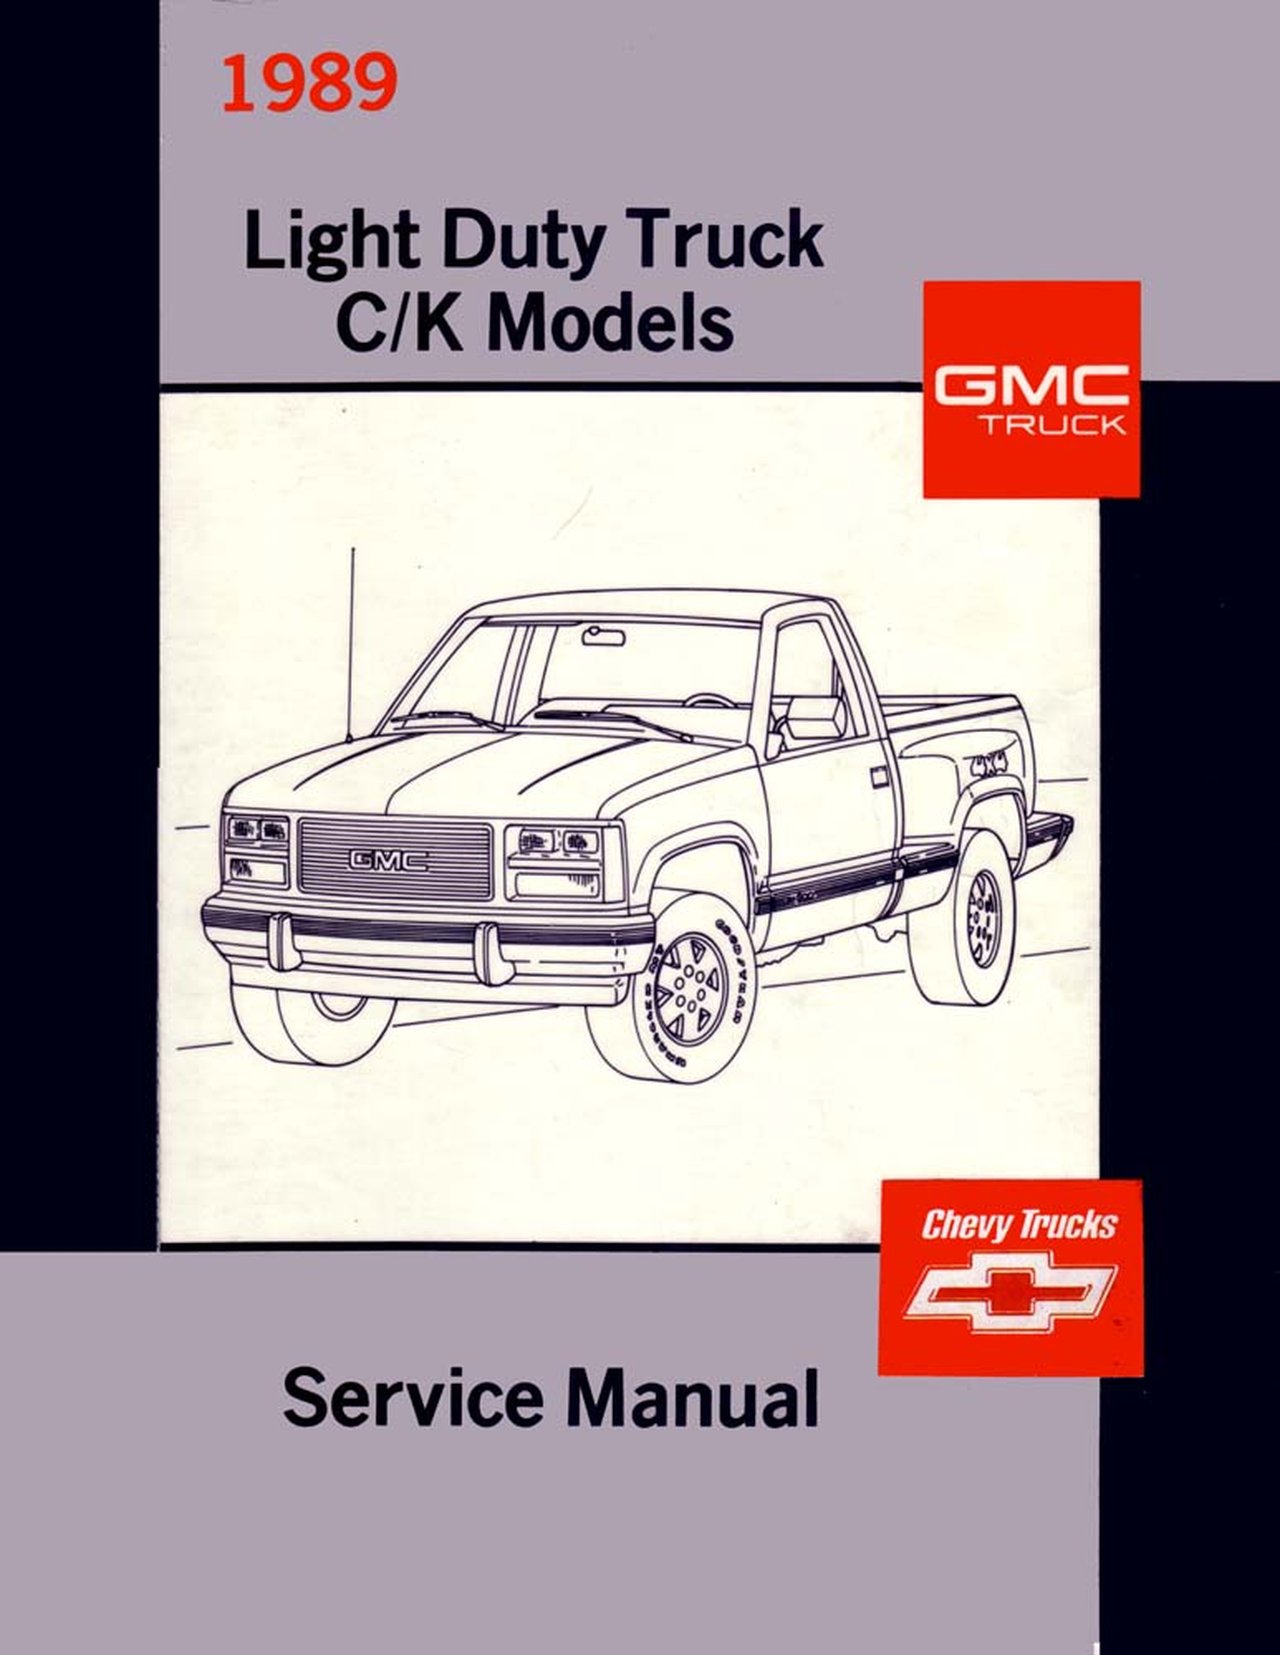 1987 CHEVROLET TRUCK SHOP MANUAL-LIGHT DUTY MODELS-10-30 SERIES